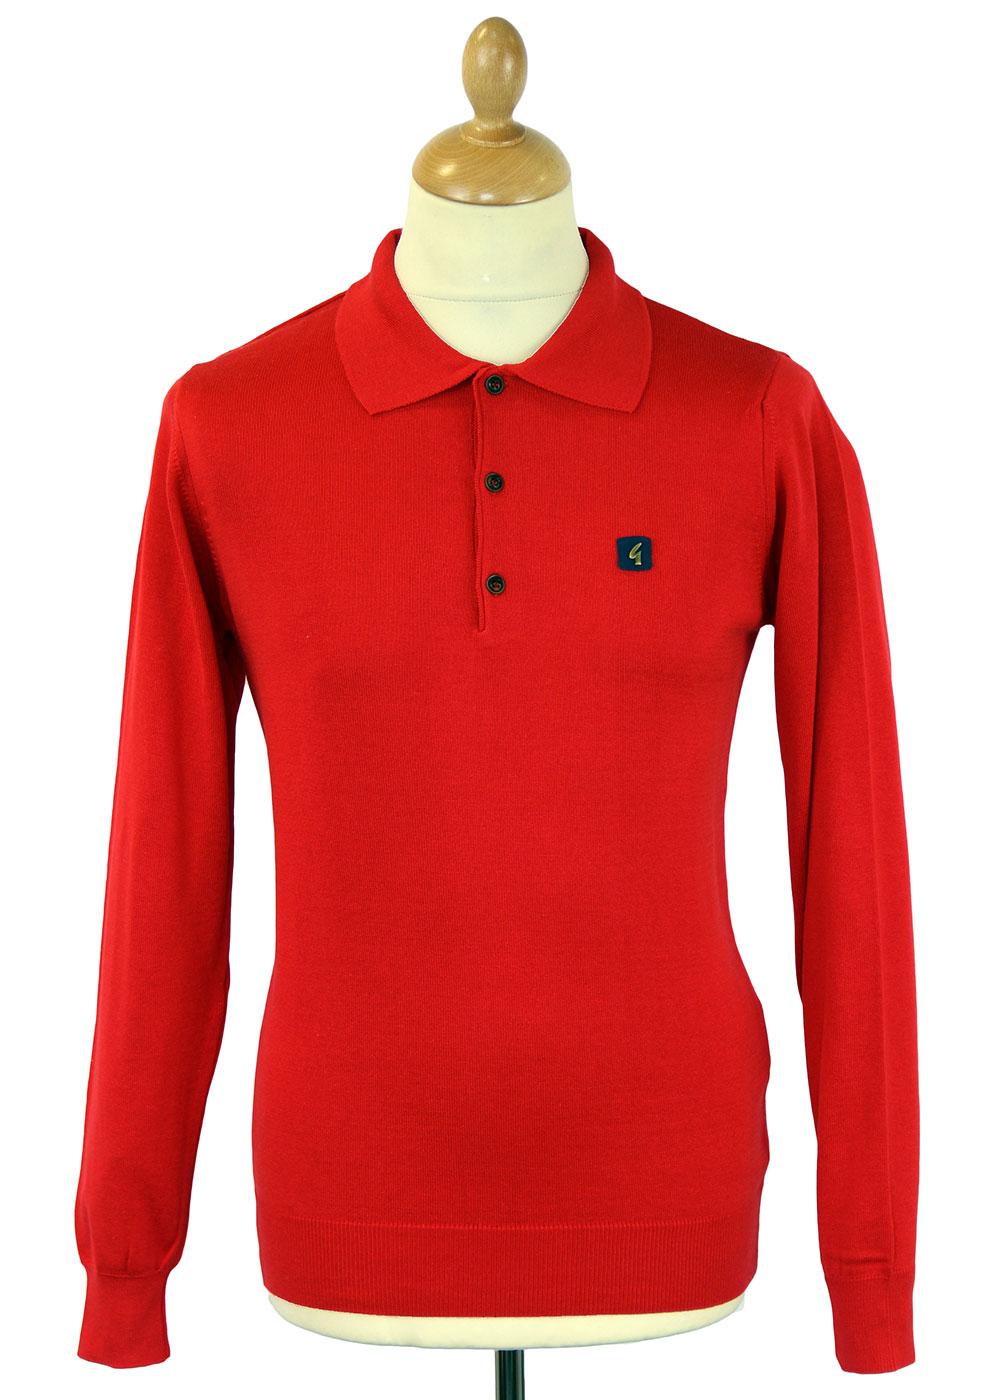 GABICCI VINTAGE Retro Mod Knit L/S Polo Shirt (R)